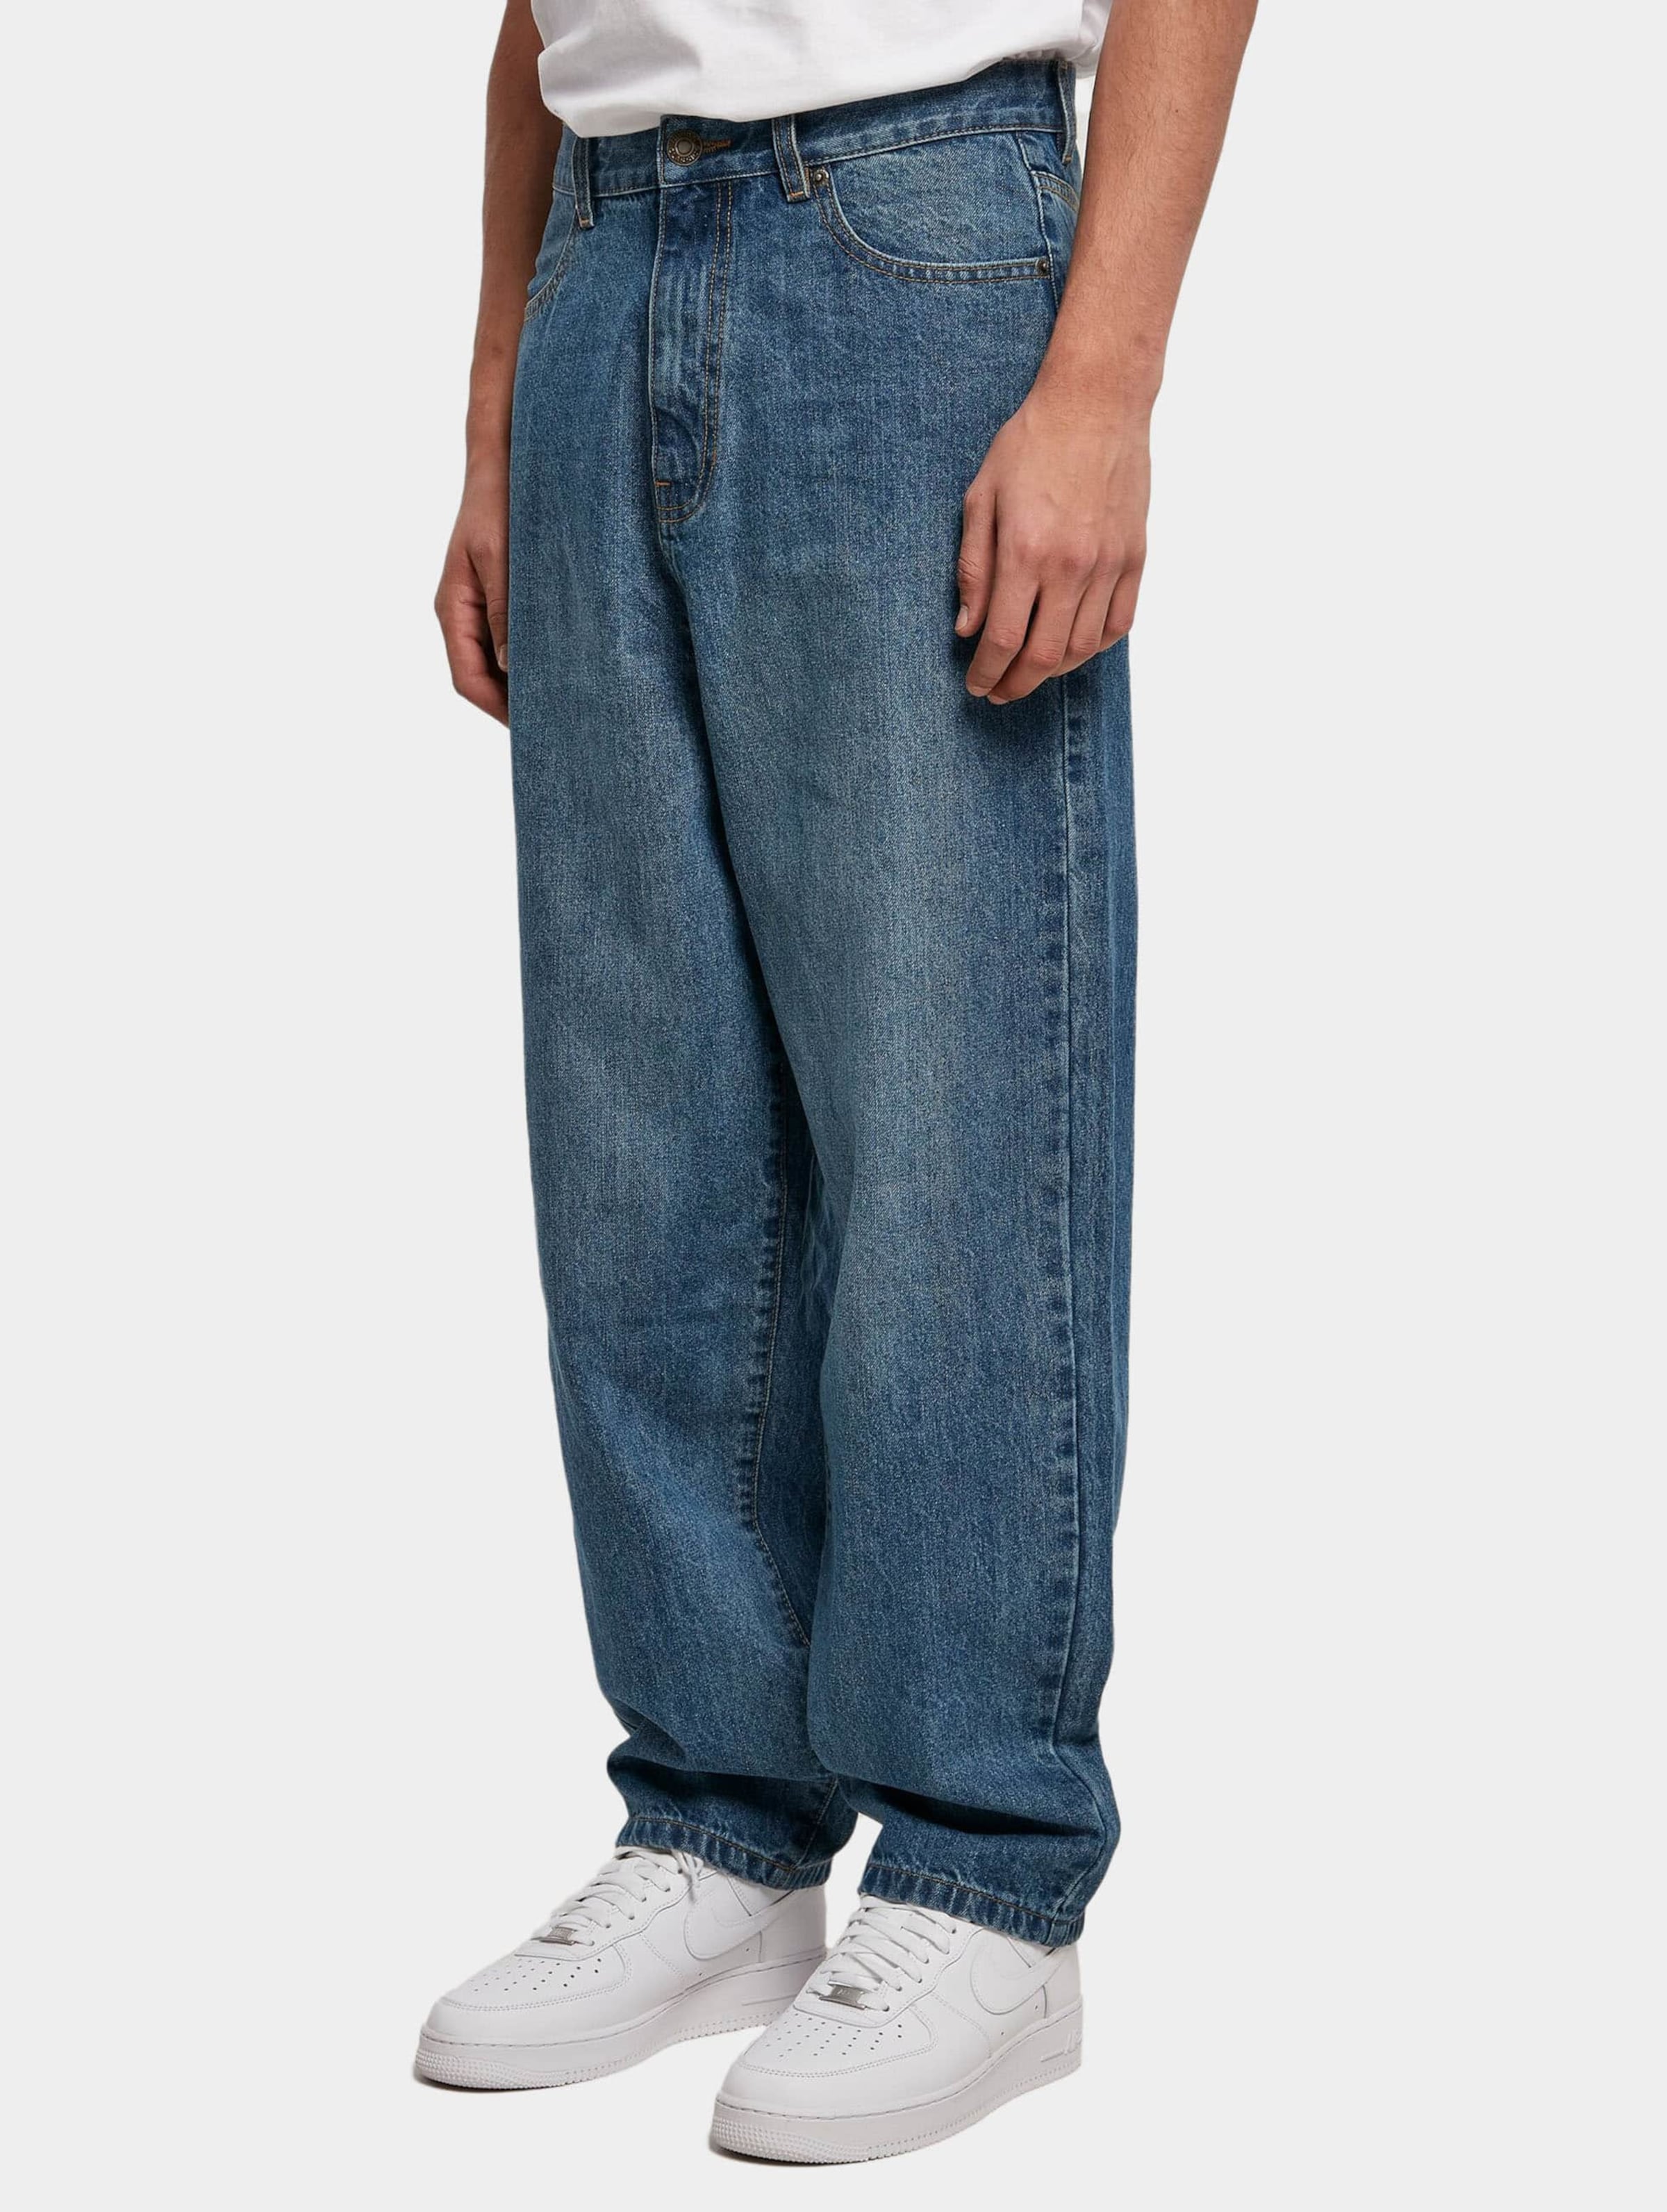 Urban Classics 90‘s Jeans product